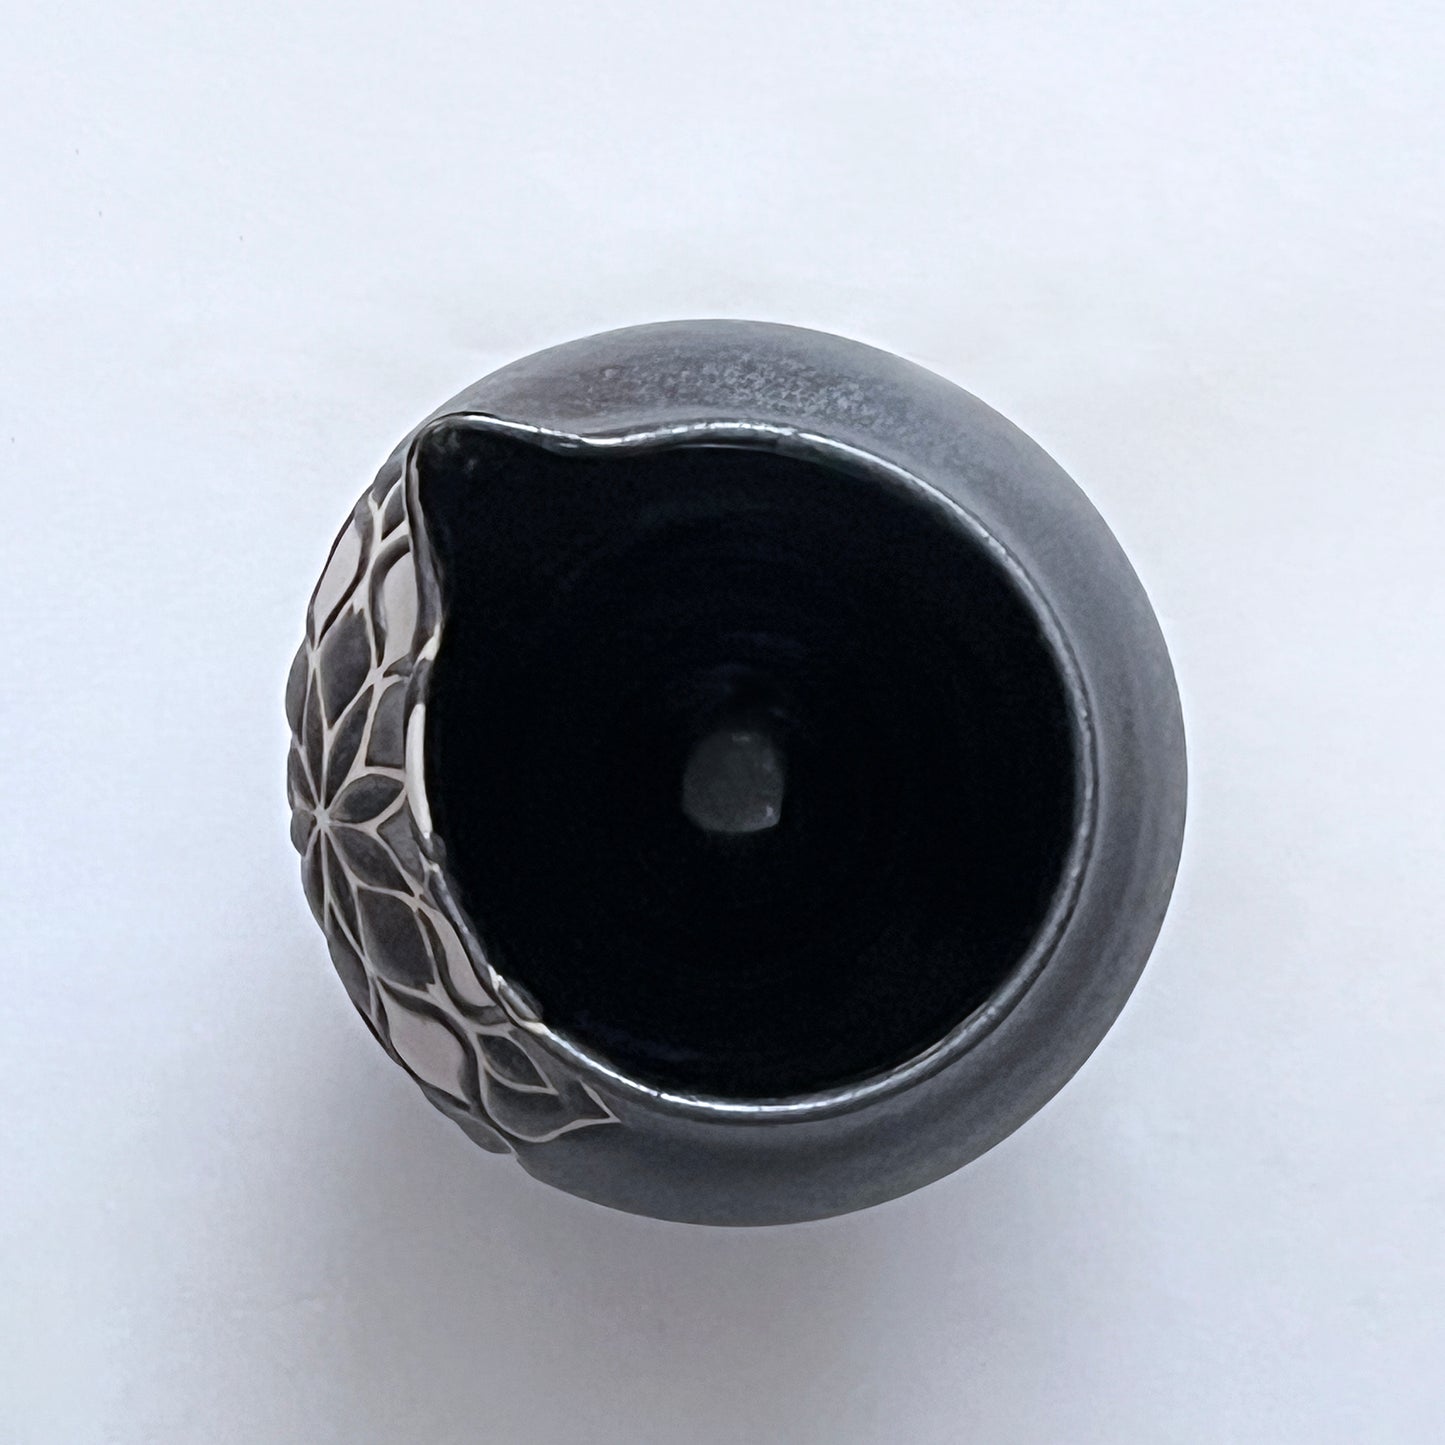 Lipped Bowl #13 (Black)